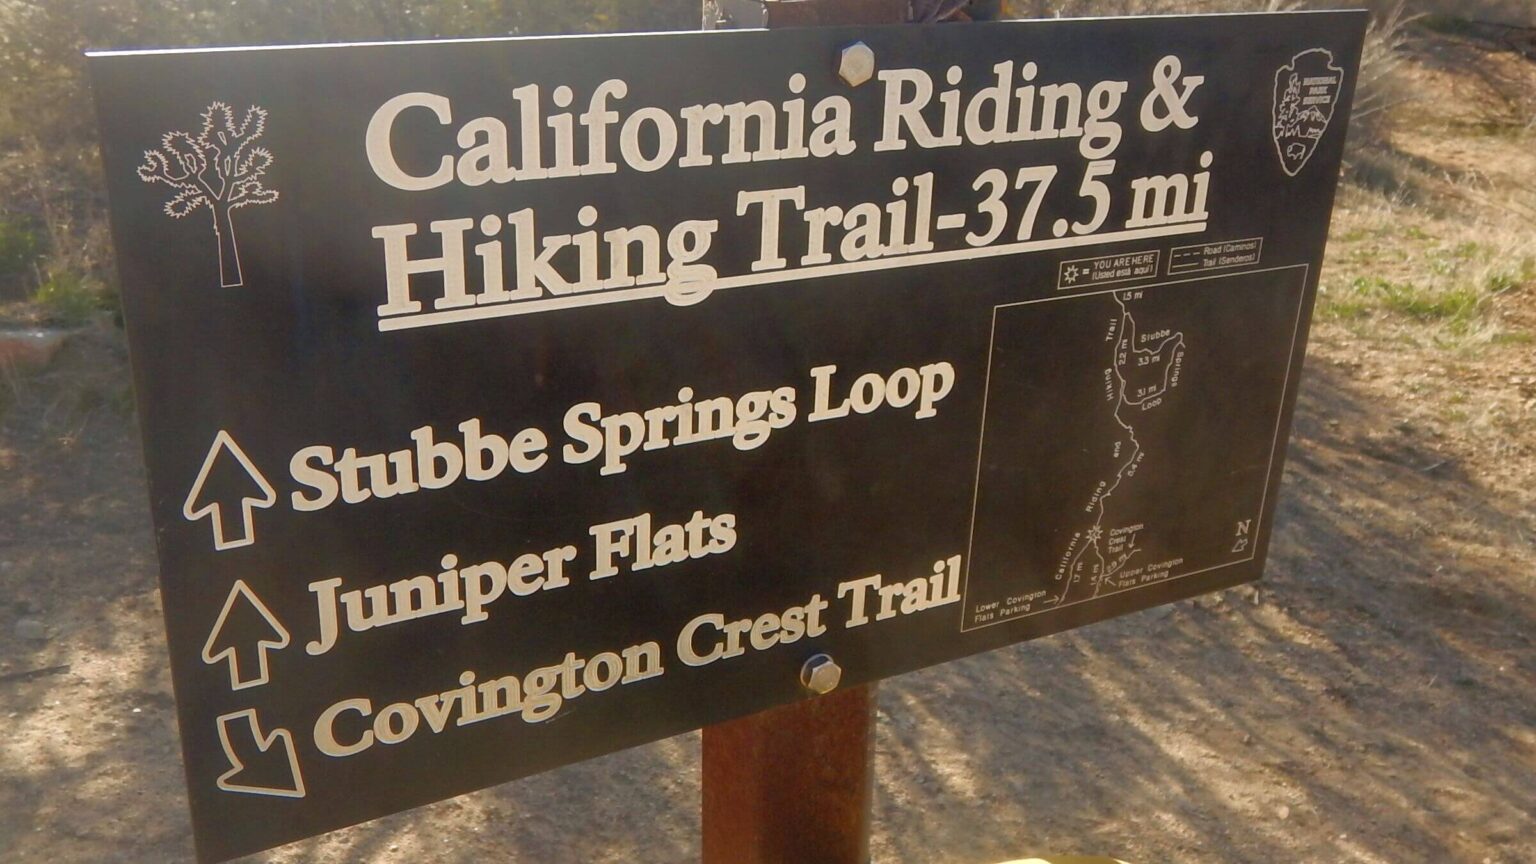 Joshua Tree Wilderness, California Riding & Hiking Trail, February